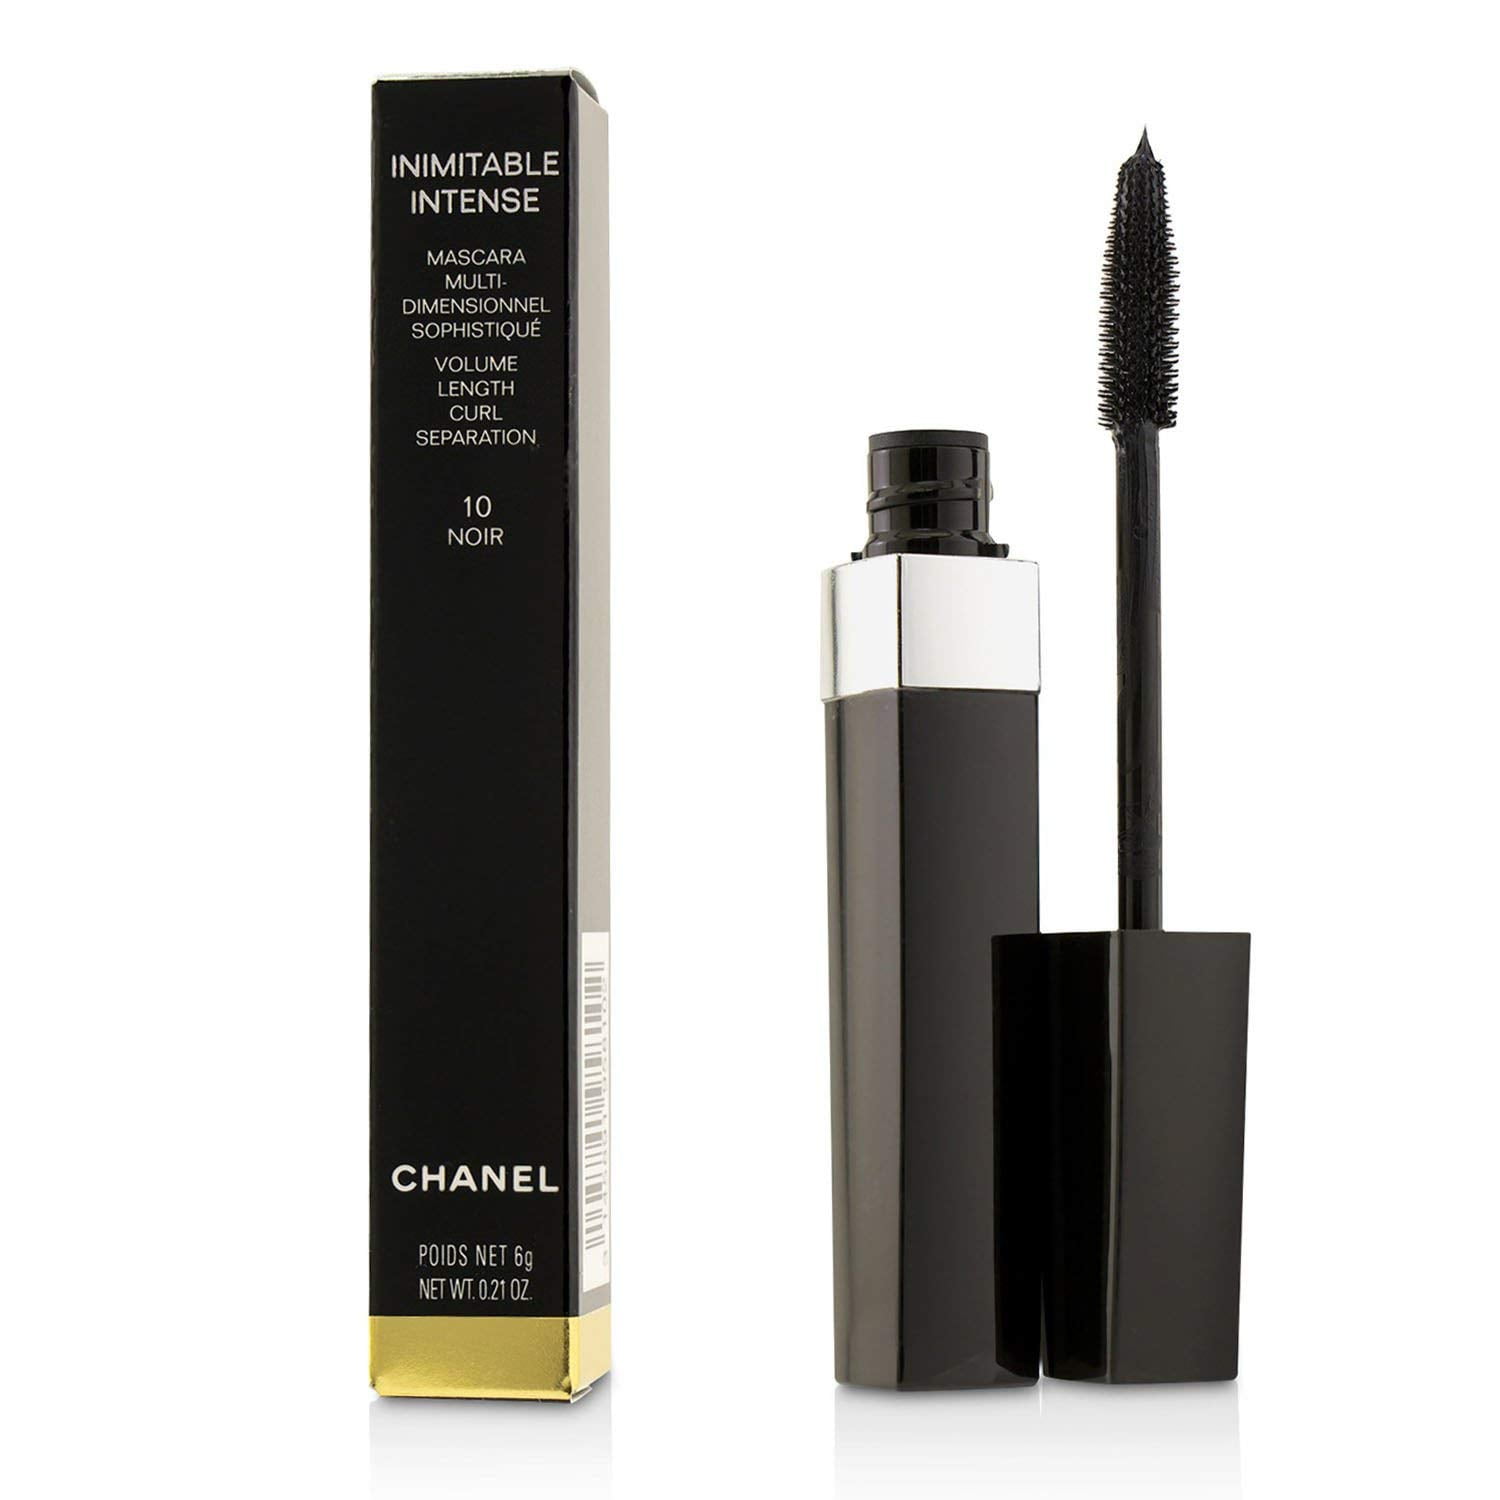 Chanel Inimitable Intense Mascara Multi Dimensionnel Sophistique #10-Noir  6g/0.21oz